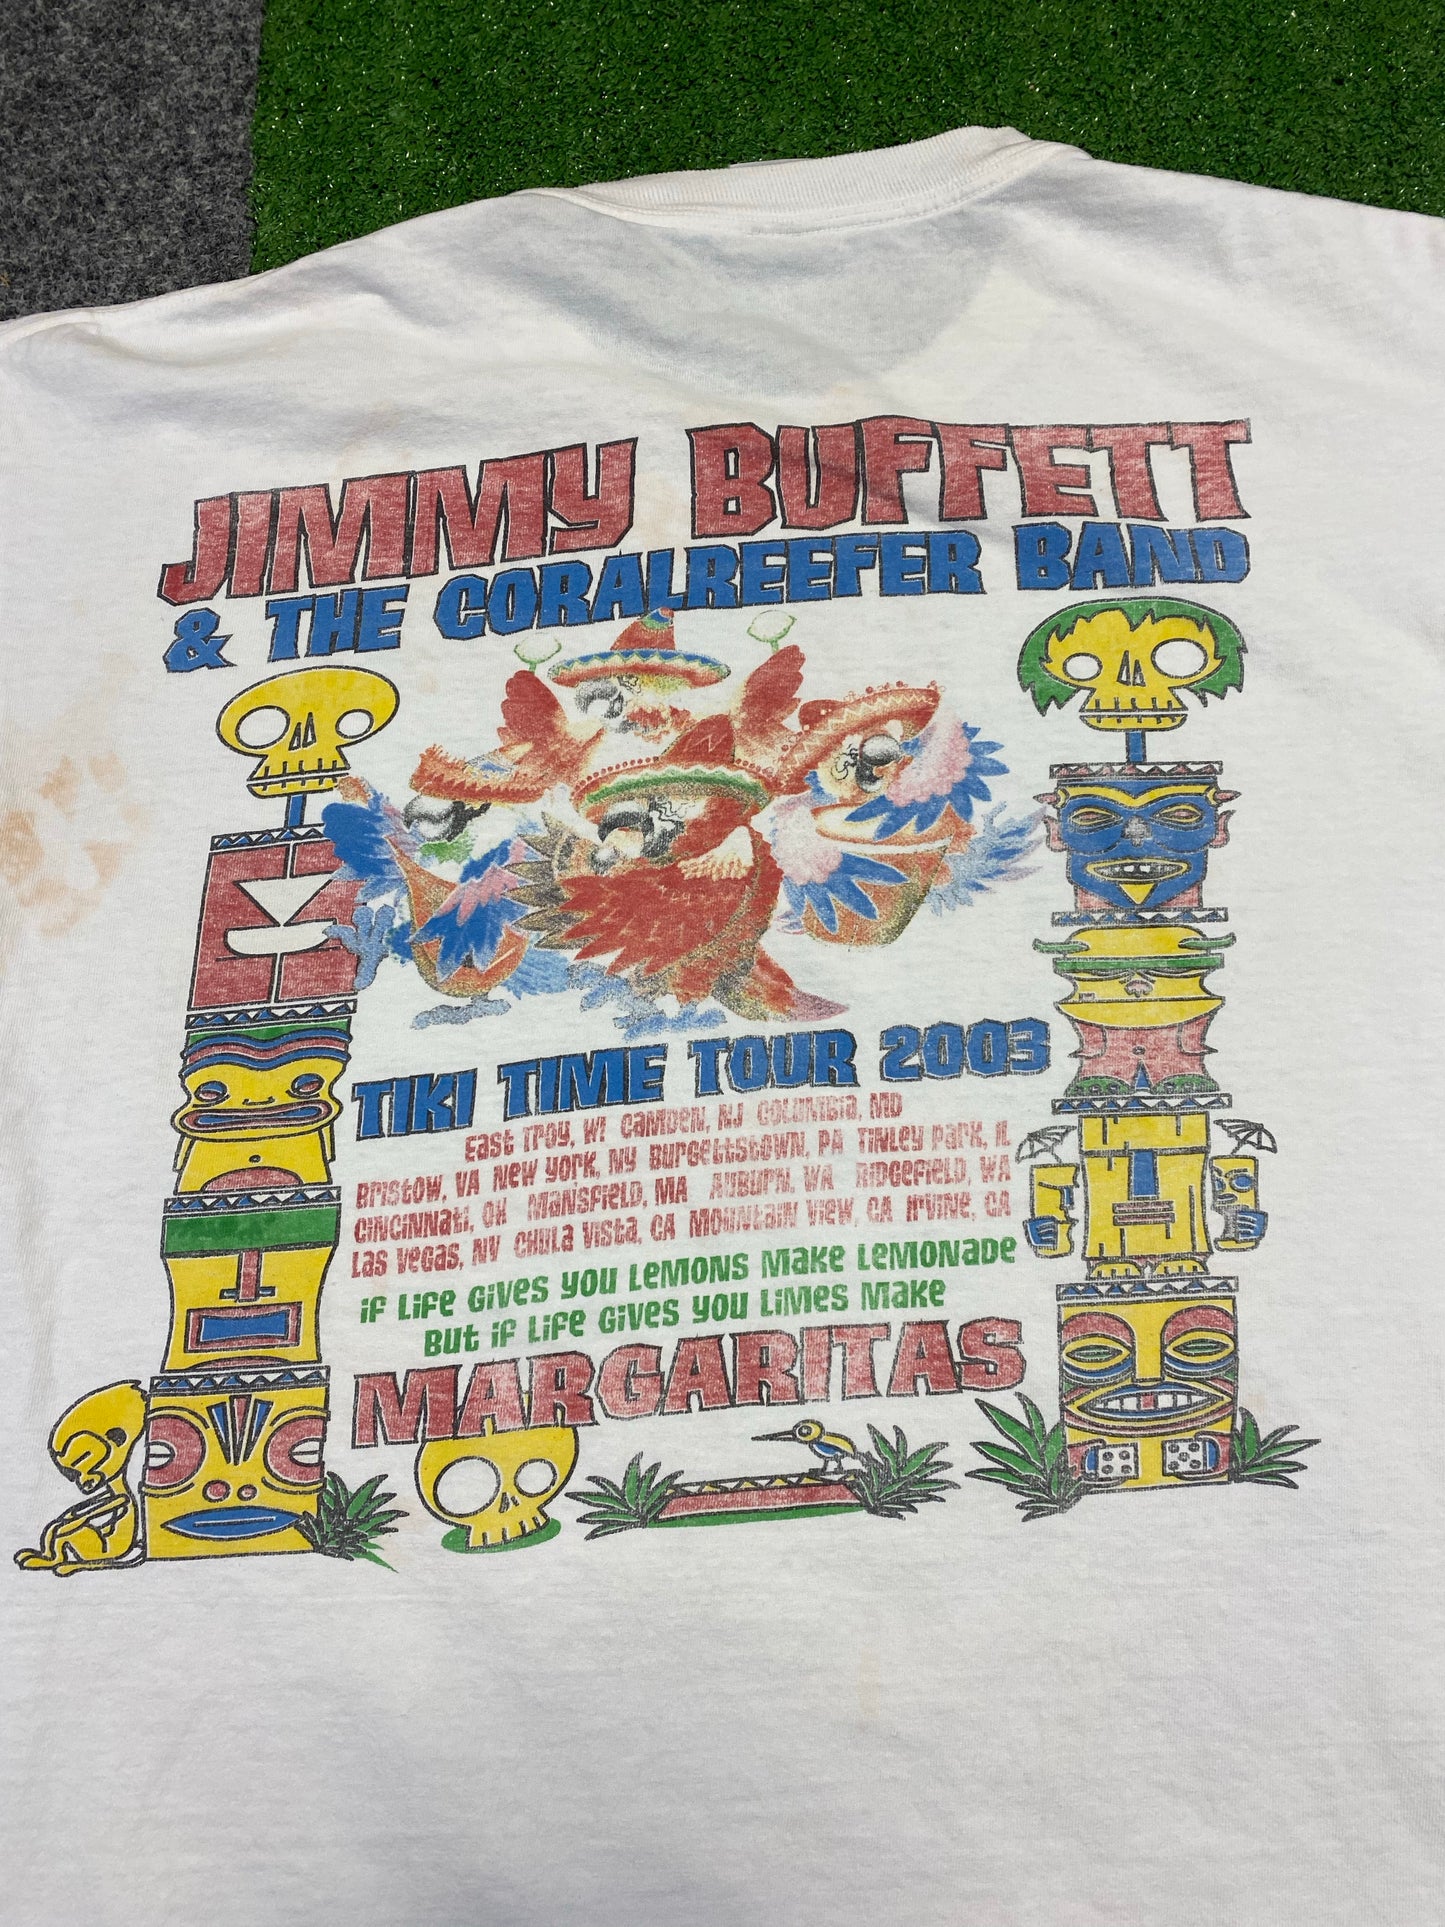 2003 Jimmy Buffett & The CoralReefer Band Tiki Time Tour T-Shirt